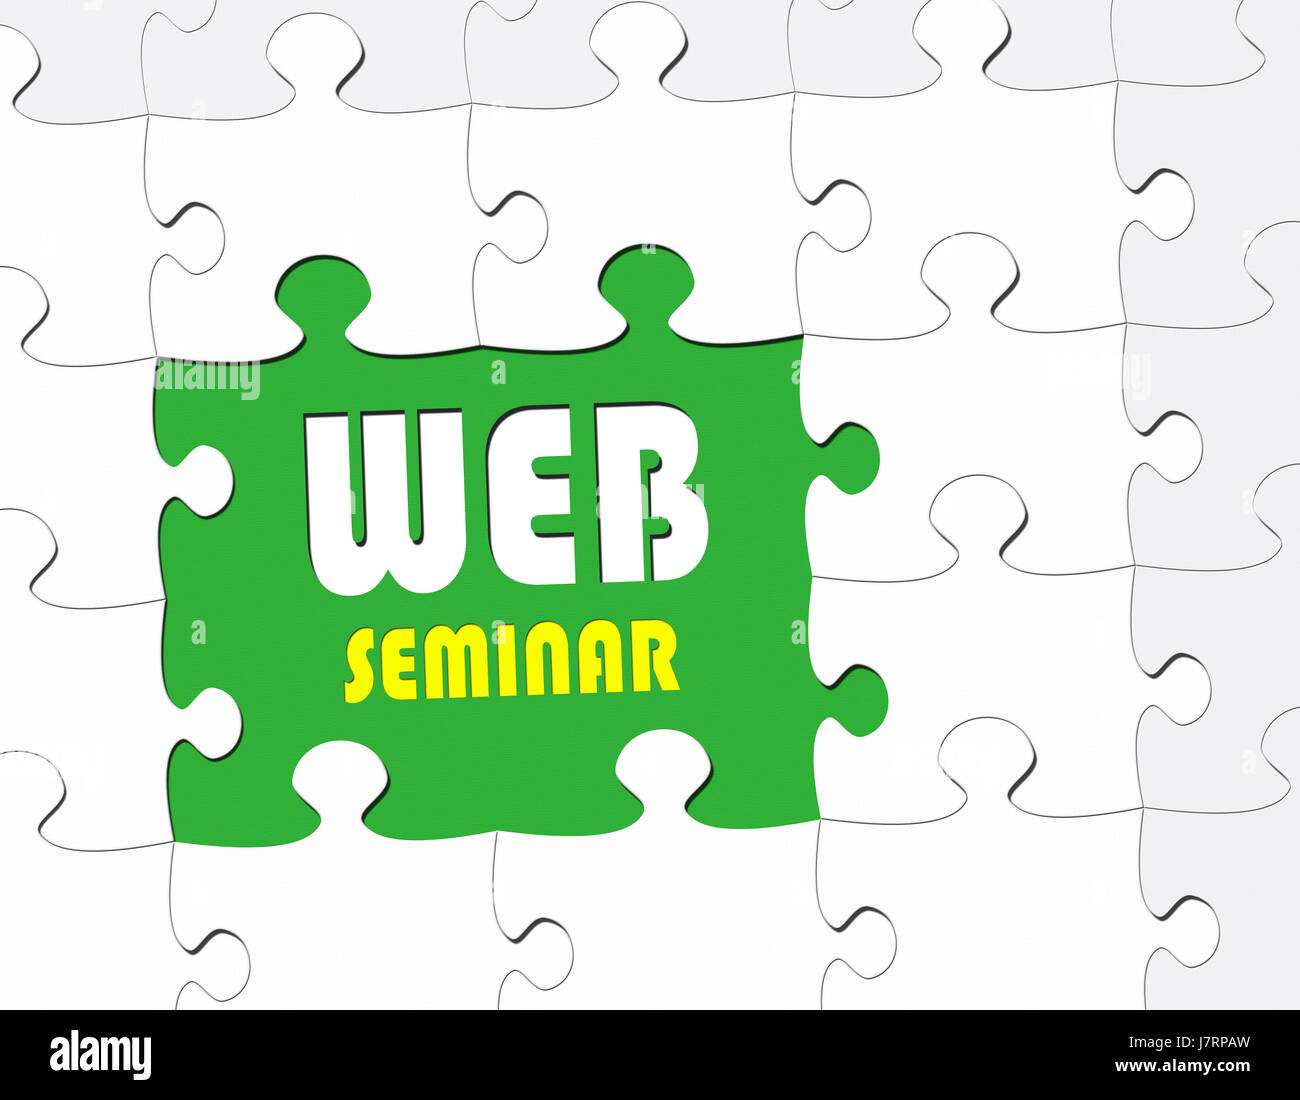 seminar seminars internet www worldwideweb net web online sign signal seminar Stock Photo